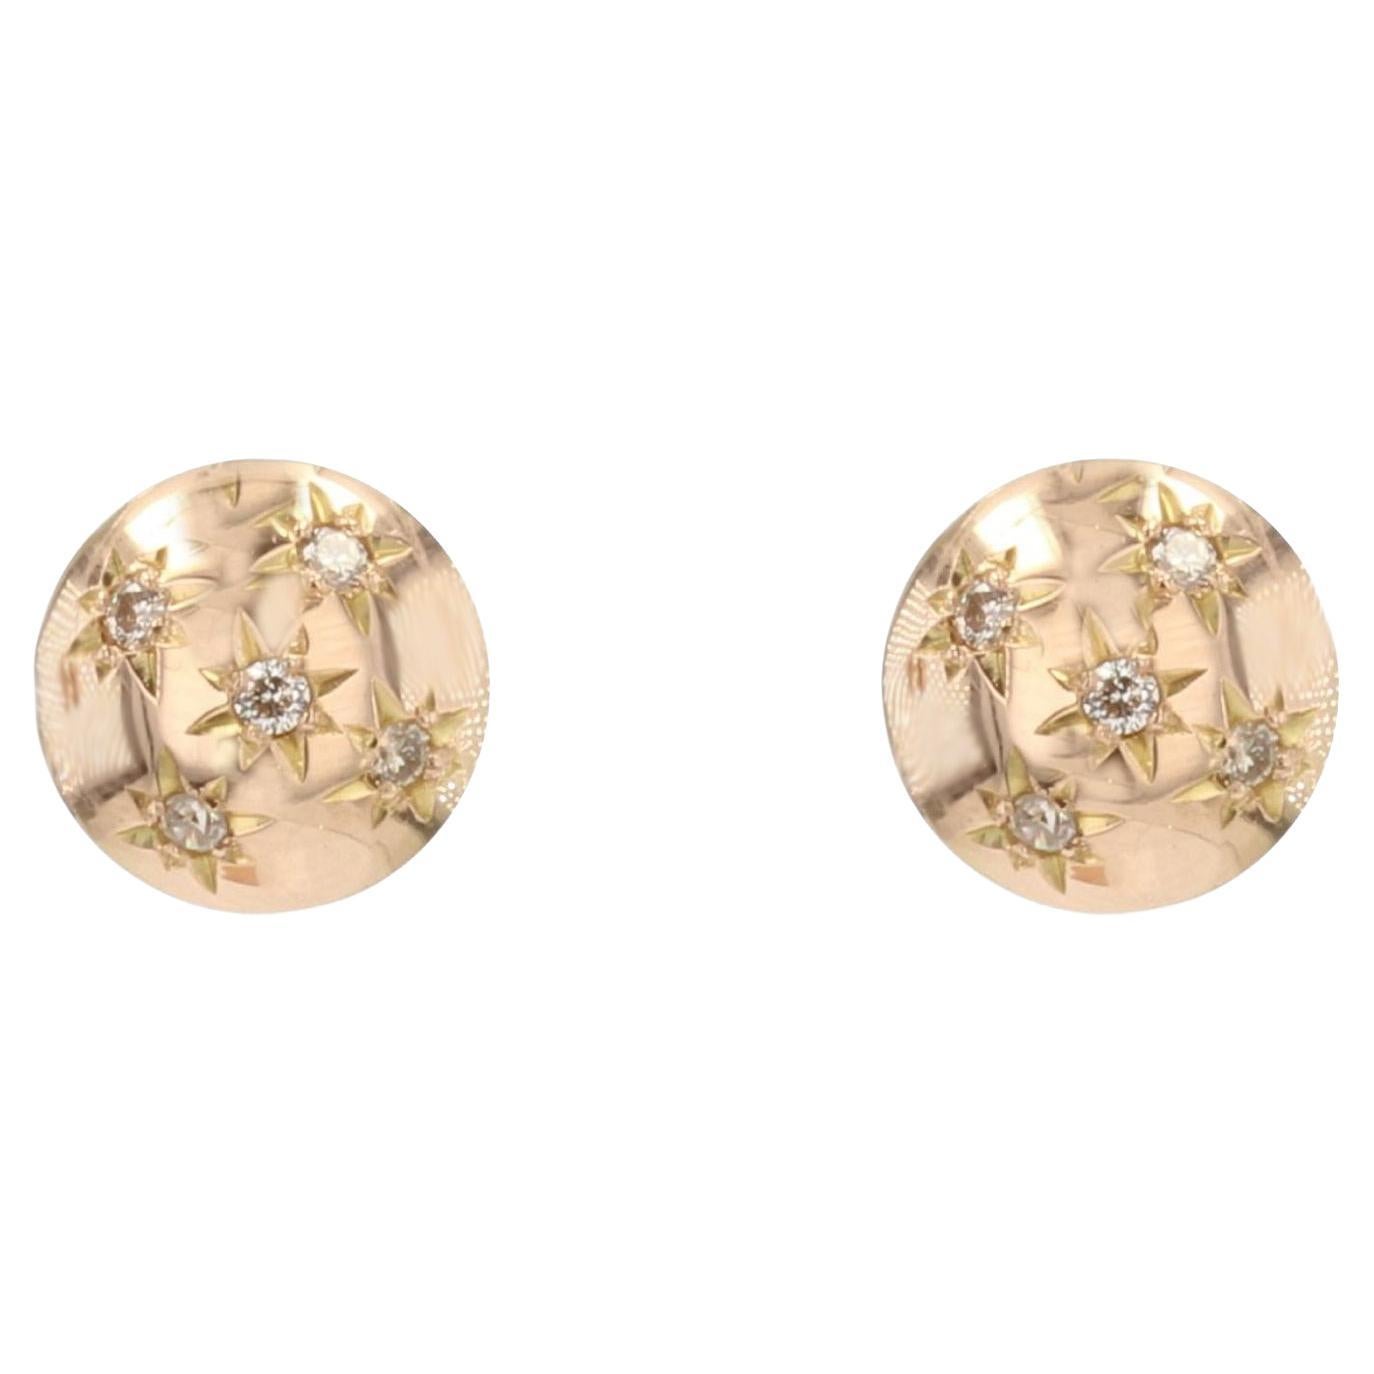 French 1950s Diamonds 18 Karat Yellow Gold Dome Earrings